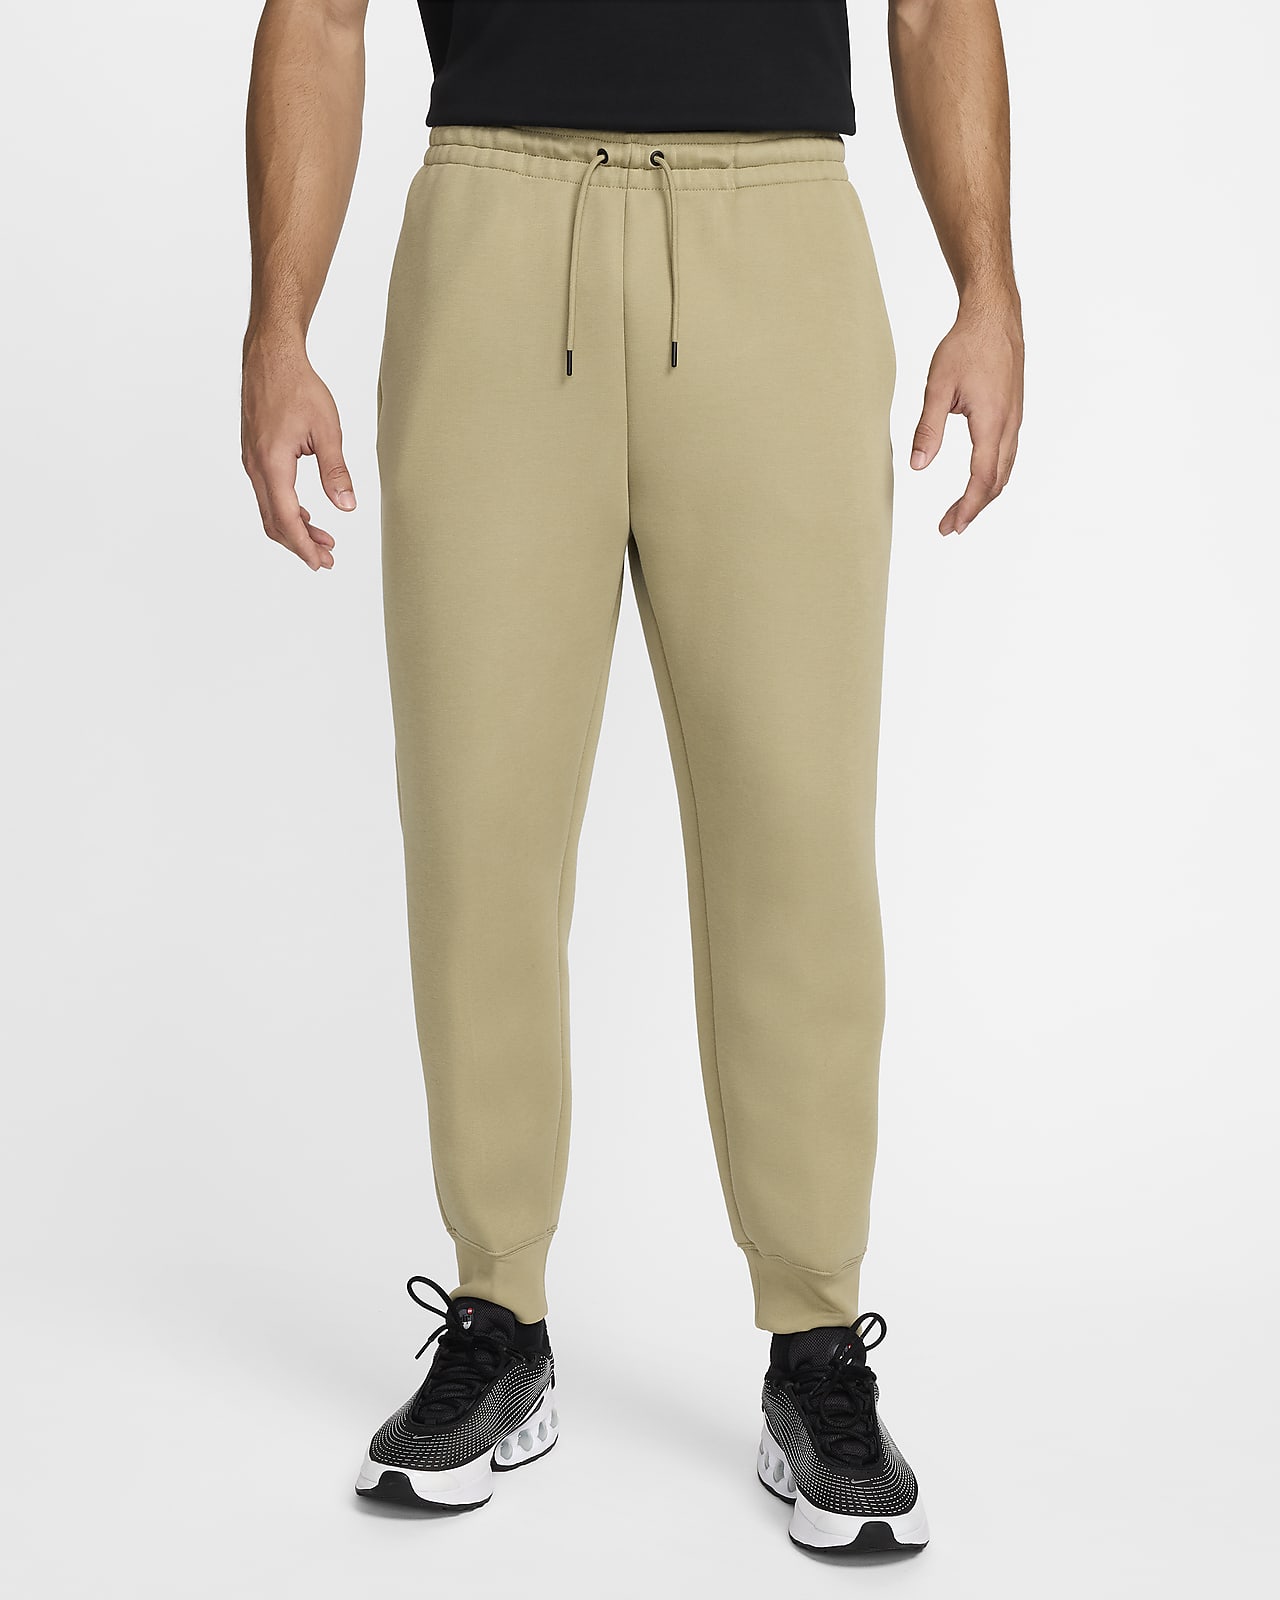 Pantaloni in fleece Nike Tech – Uomo